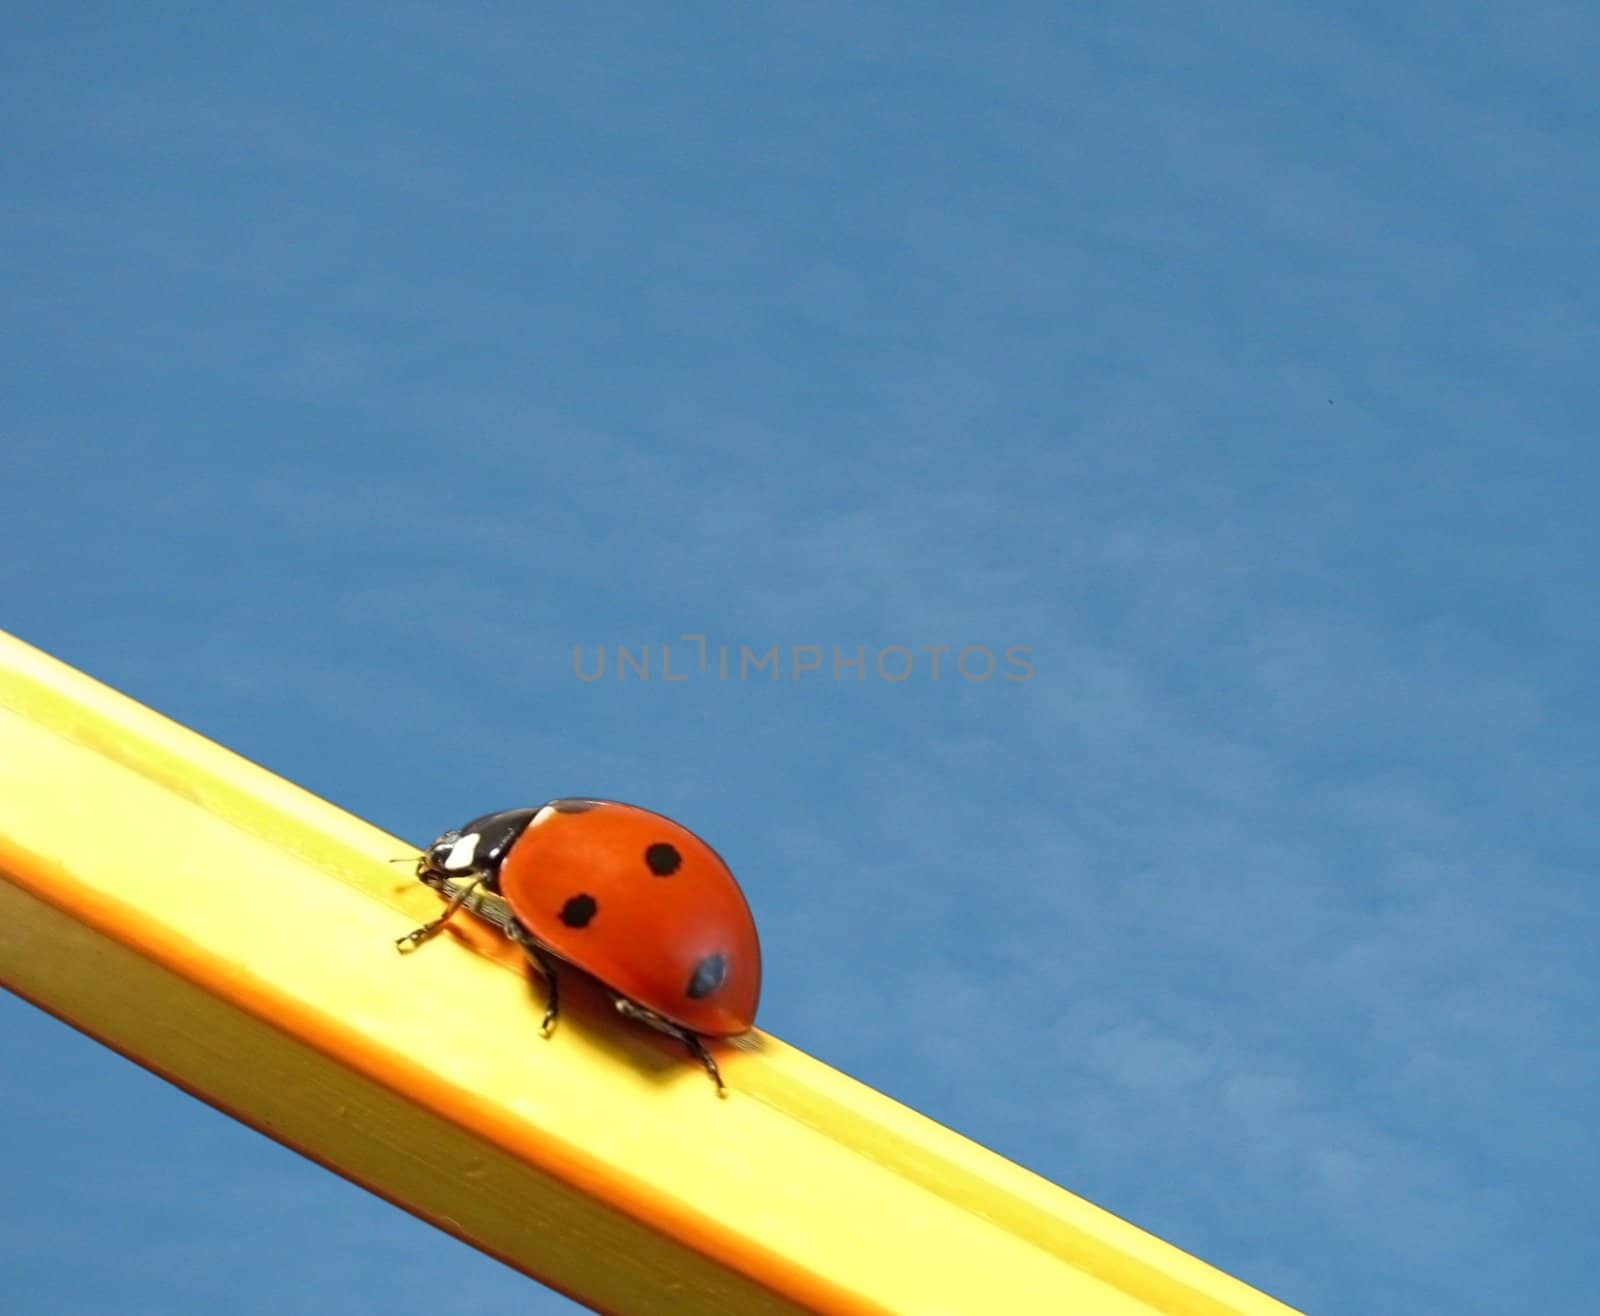 ladybug on pencil by romantiche